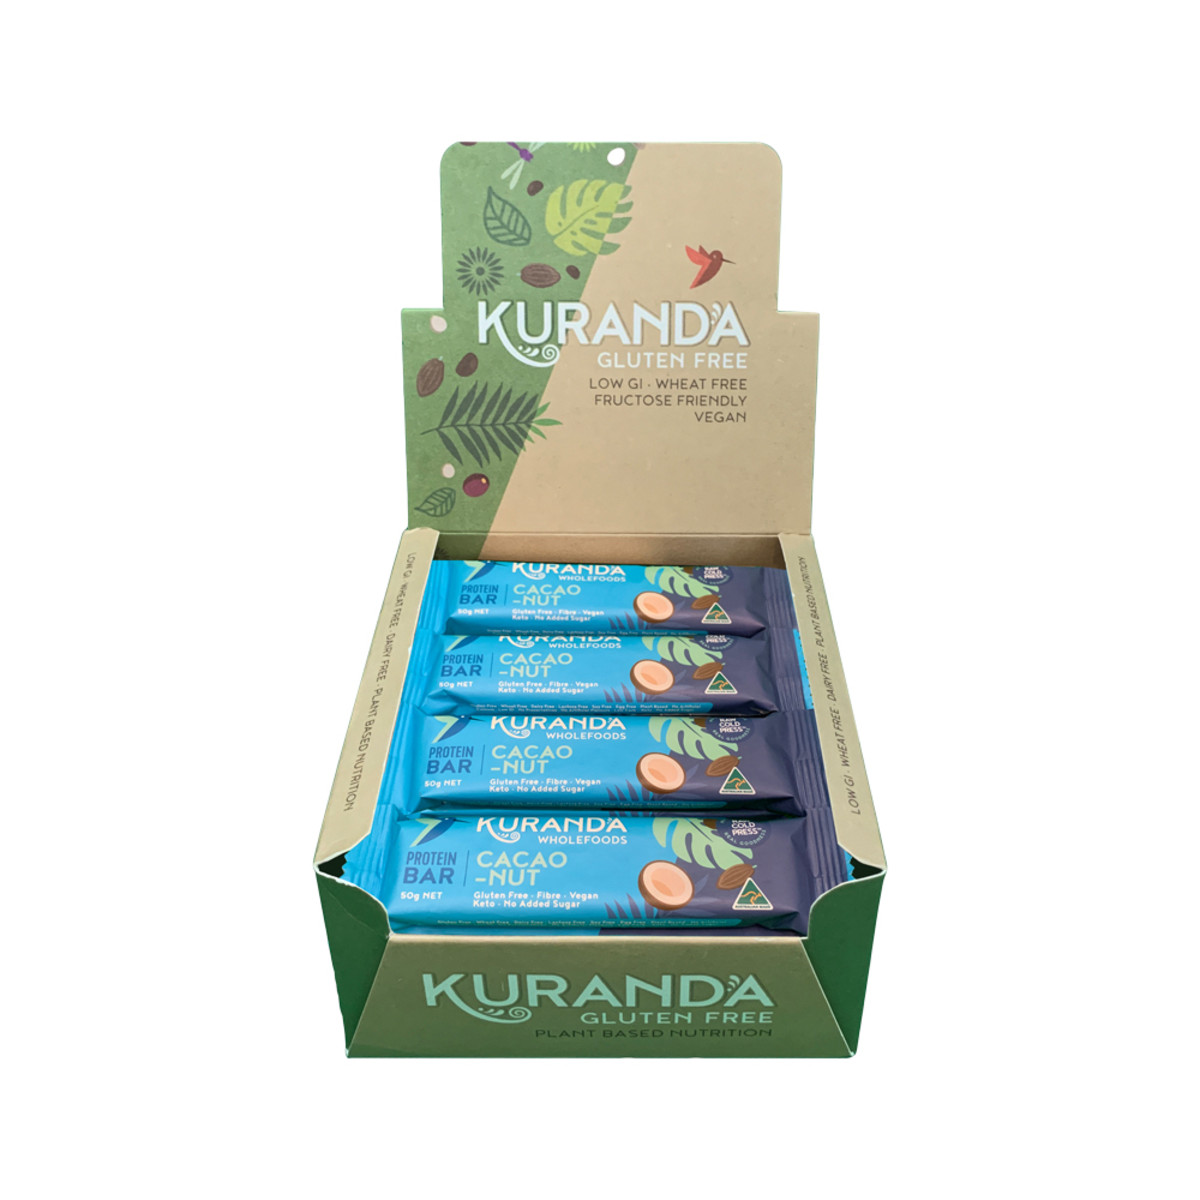 KURANDA - WHOLEFOODS Gluten Free Protein Bars Cacao Nut 50g Display